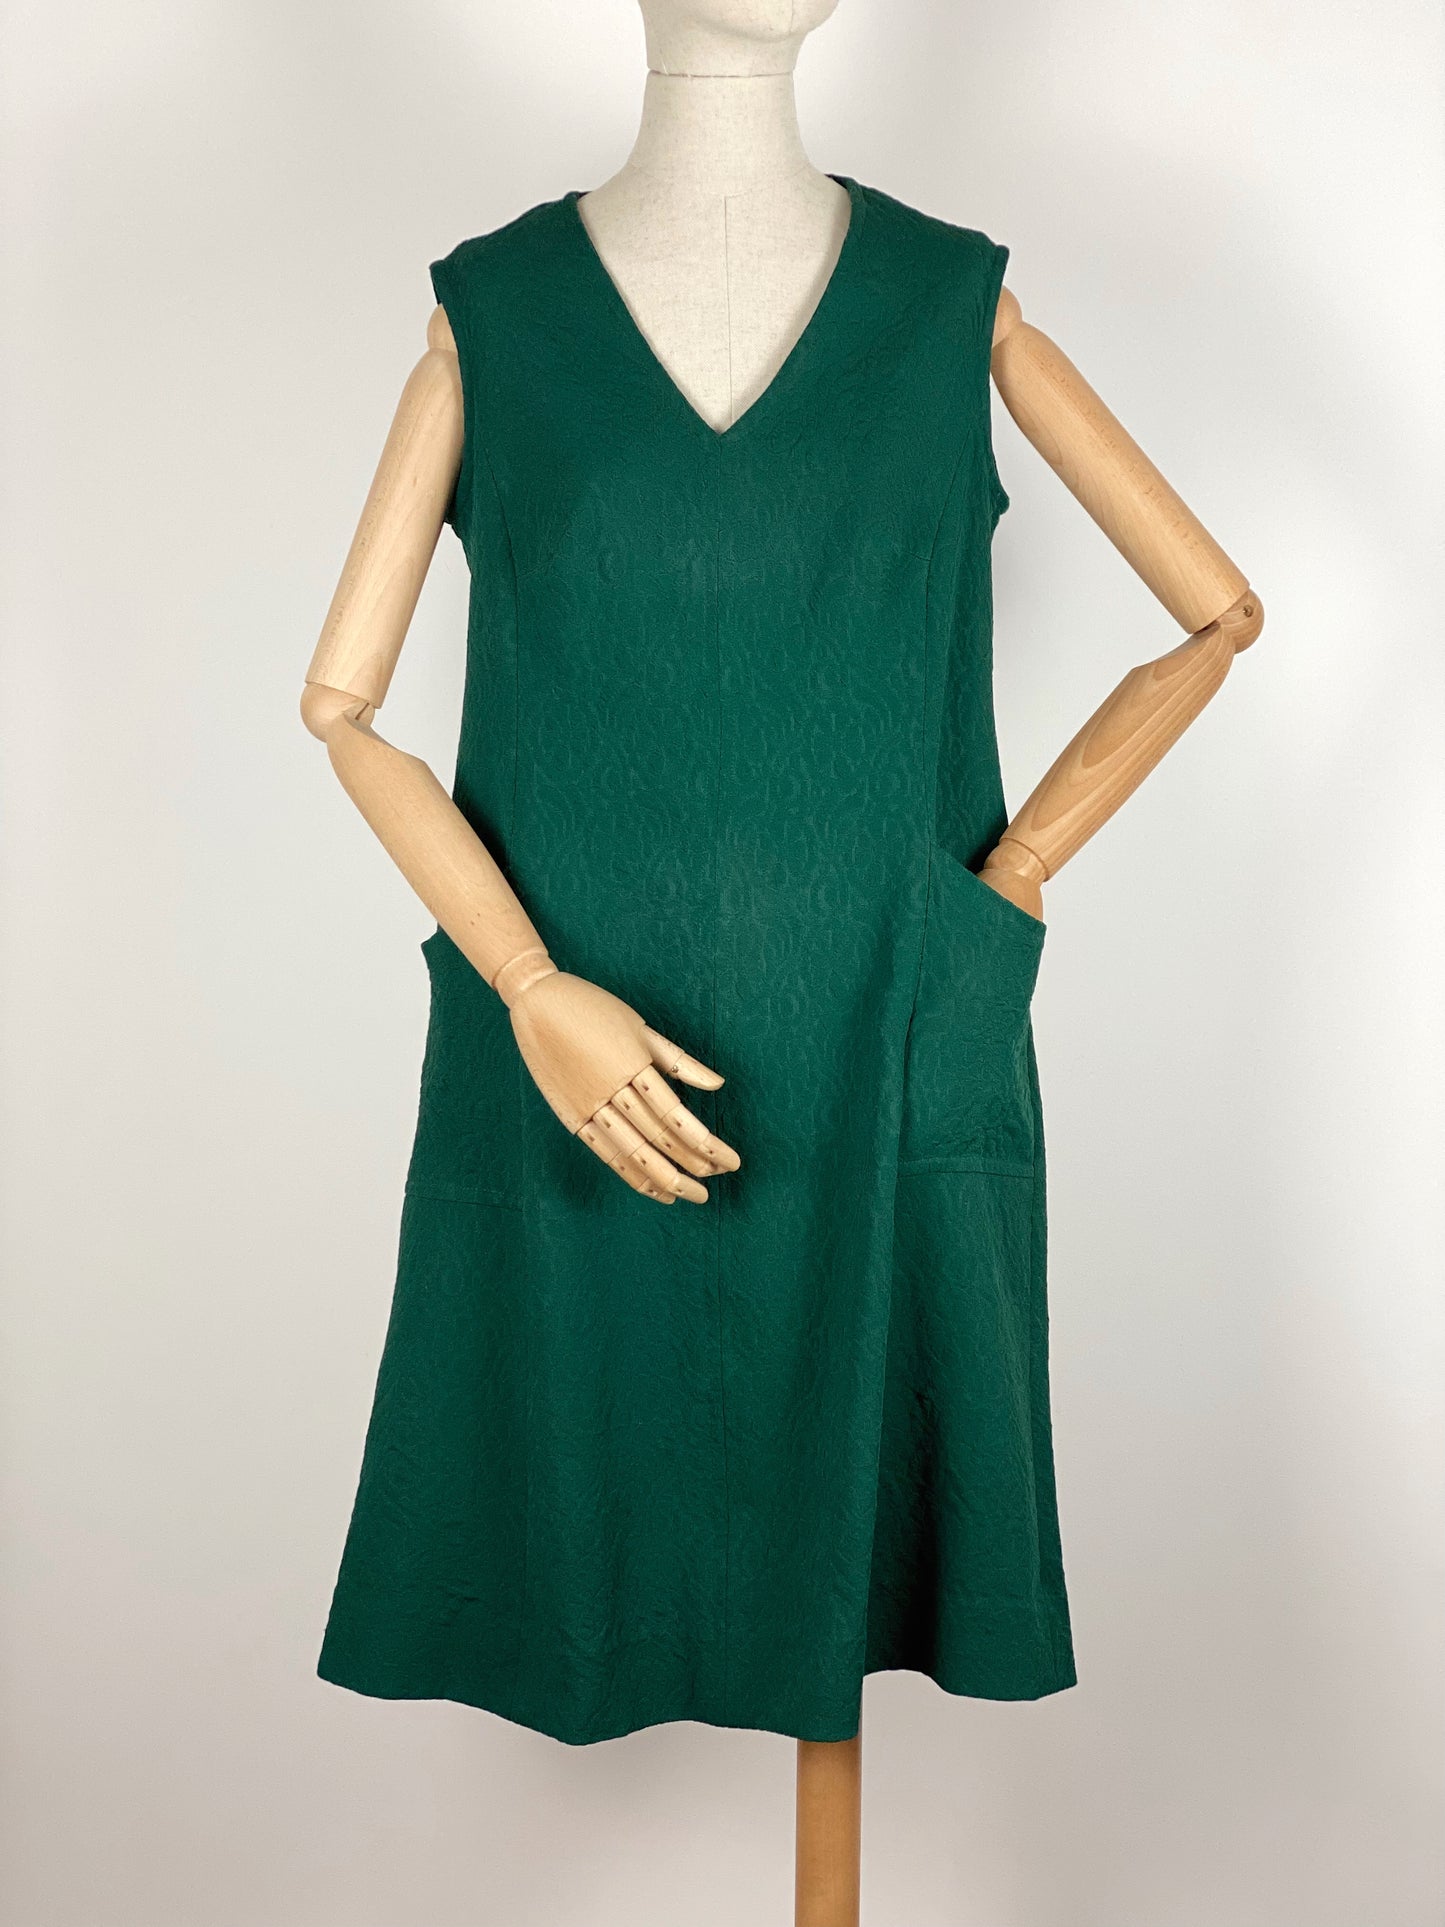 Vintage Green A-Line Dress